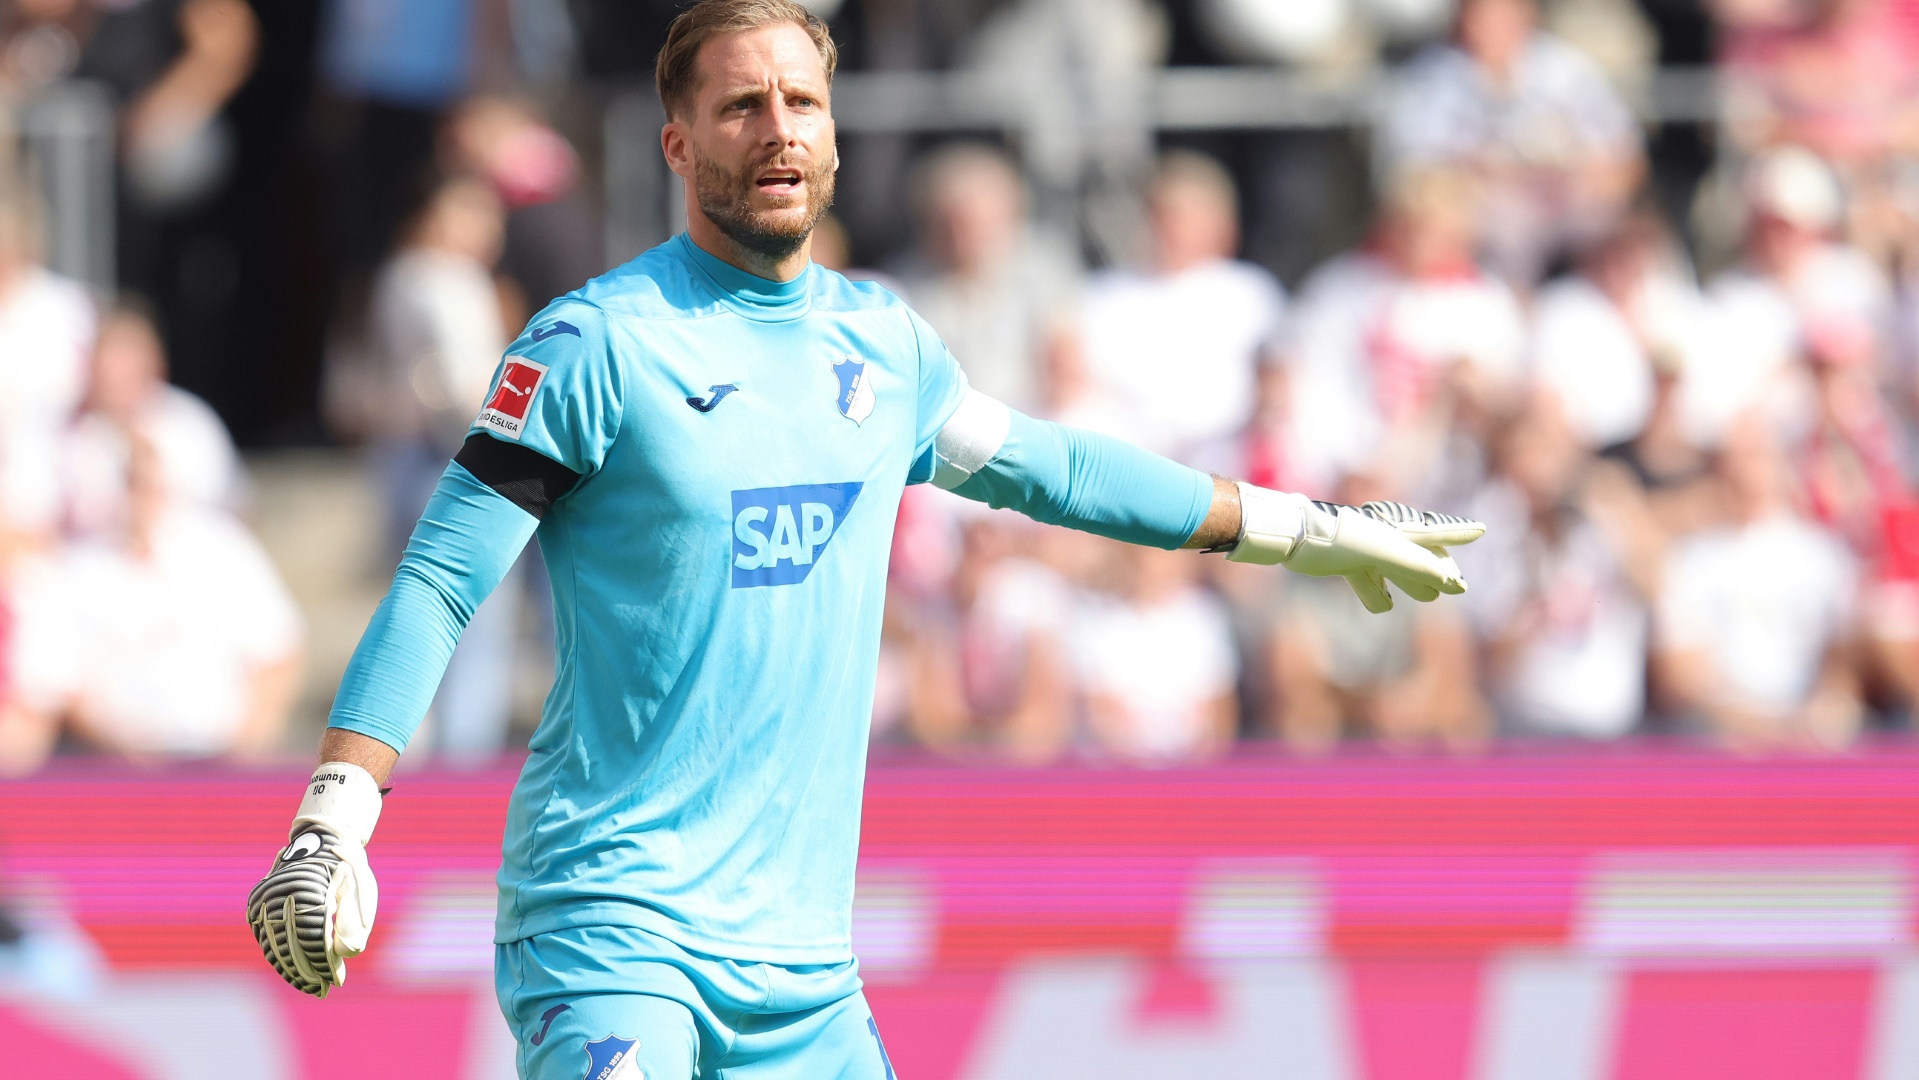 Starker Baumann hält die drei Punkte gegen den VfB fest